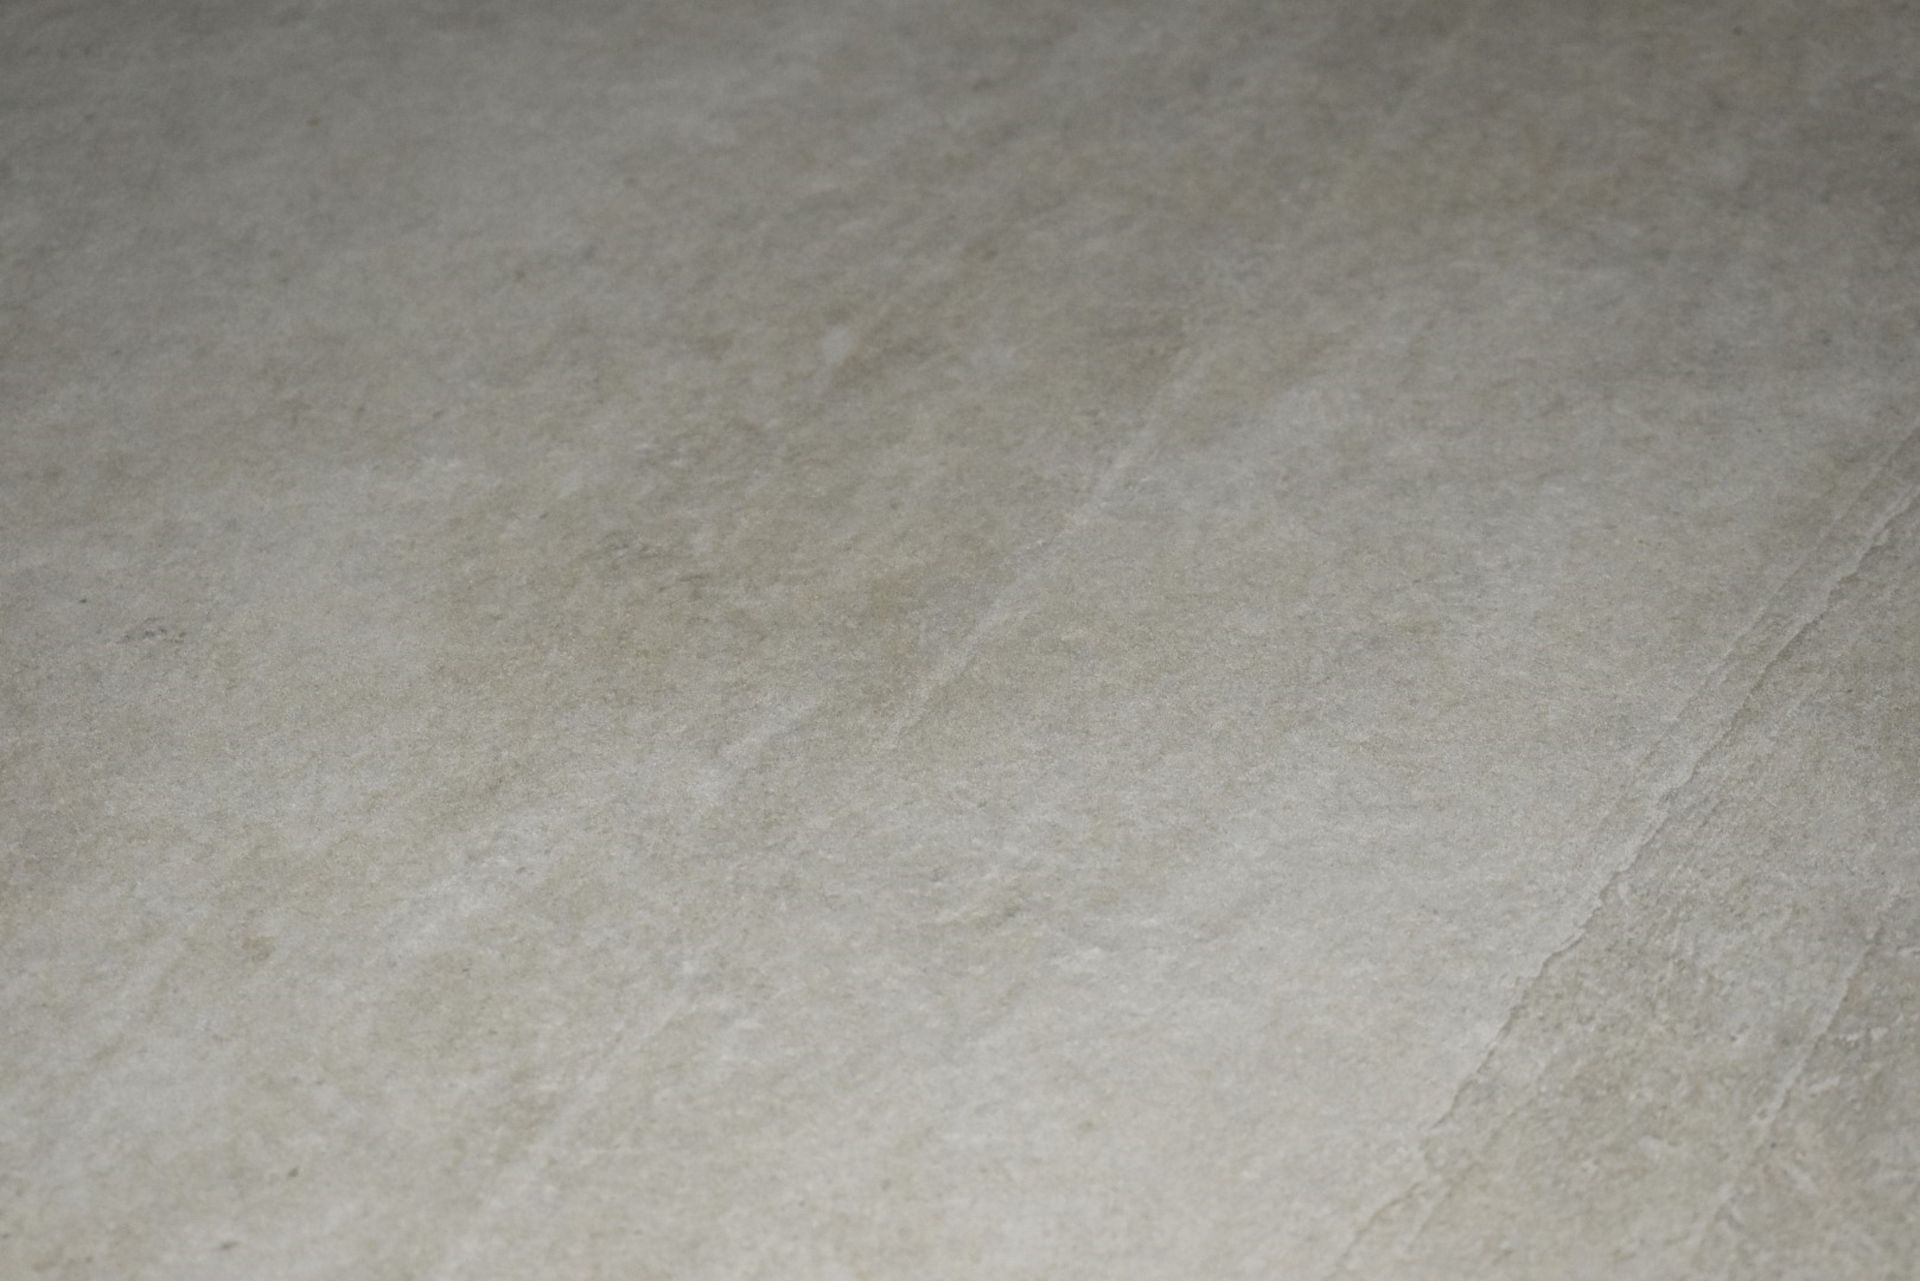 2 x Boxes of RAK Porcelain Floor or Wall Tiles - Concrete Design in Clay Brown - 60 x 60 cm